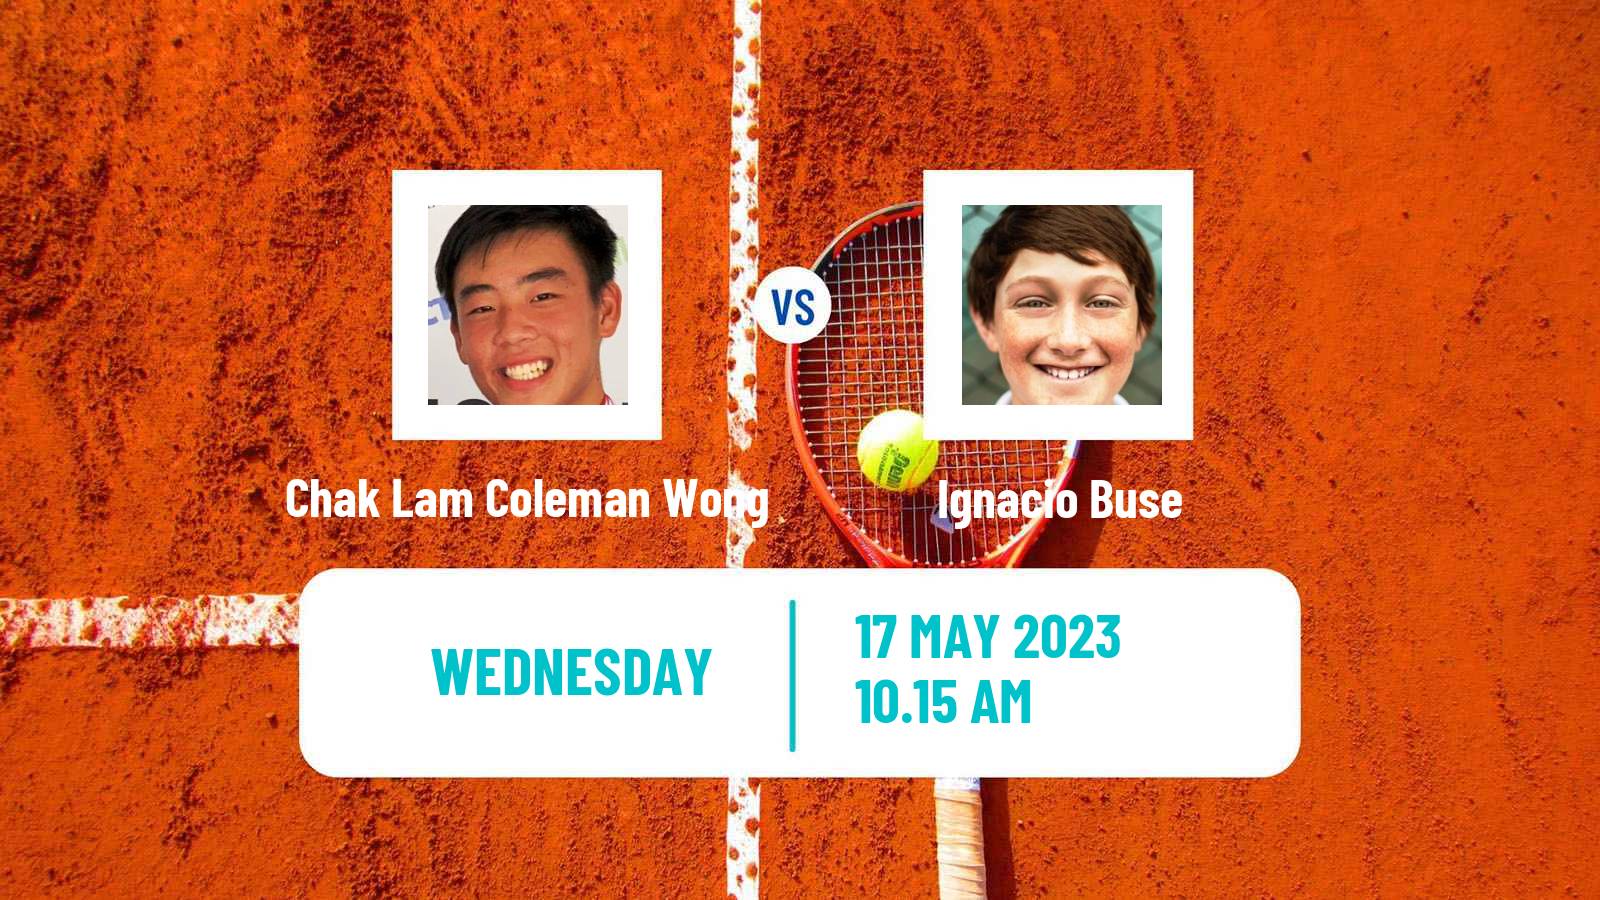 Tennis ITF M25 Gurb Men Chak Lam Coleman Wong - Ignacio Buse